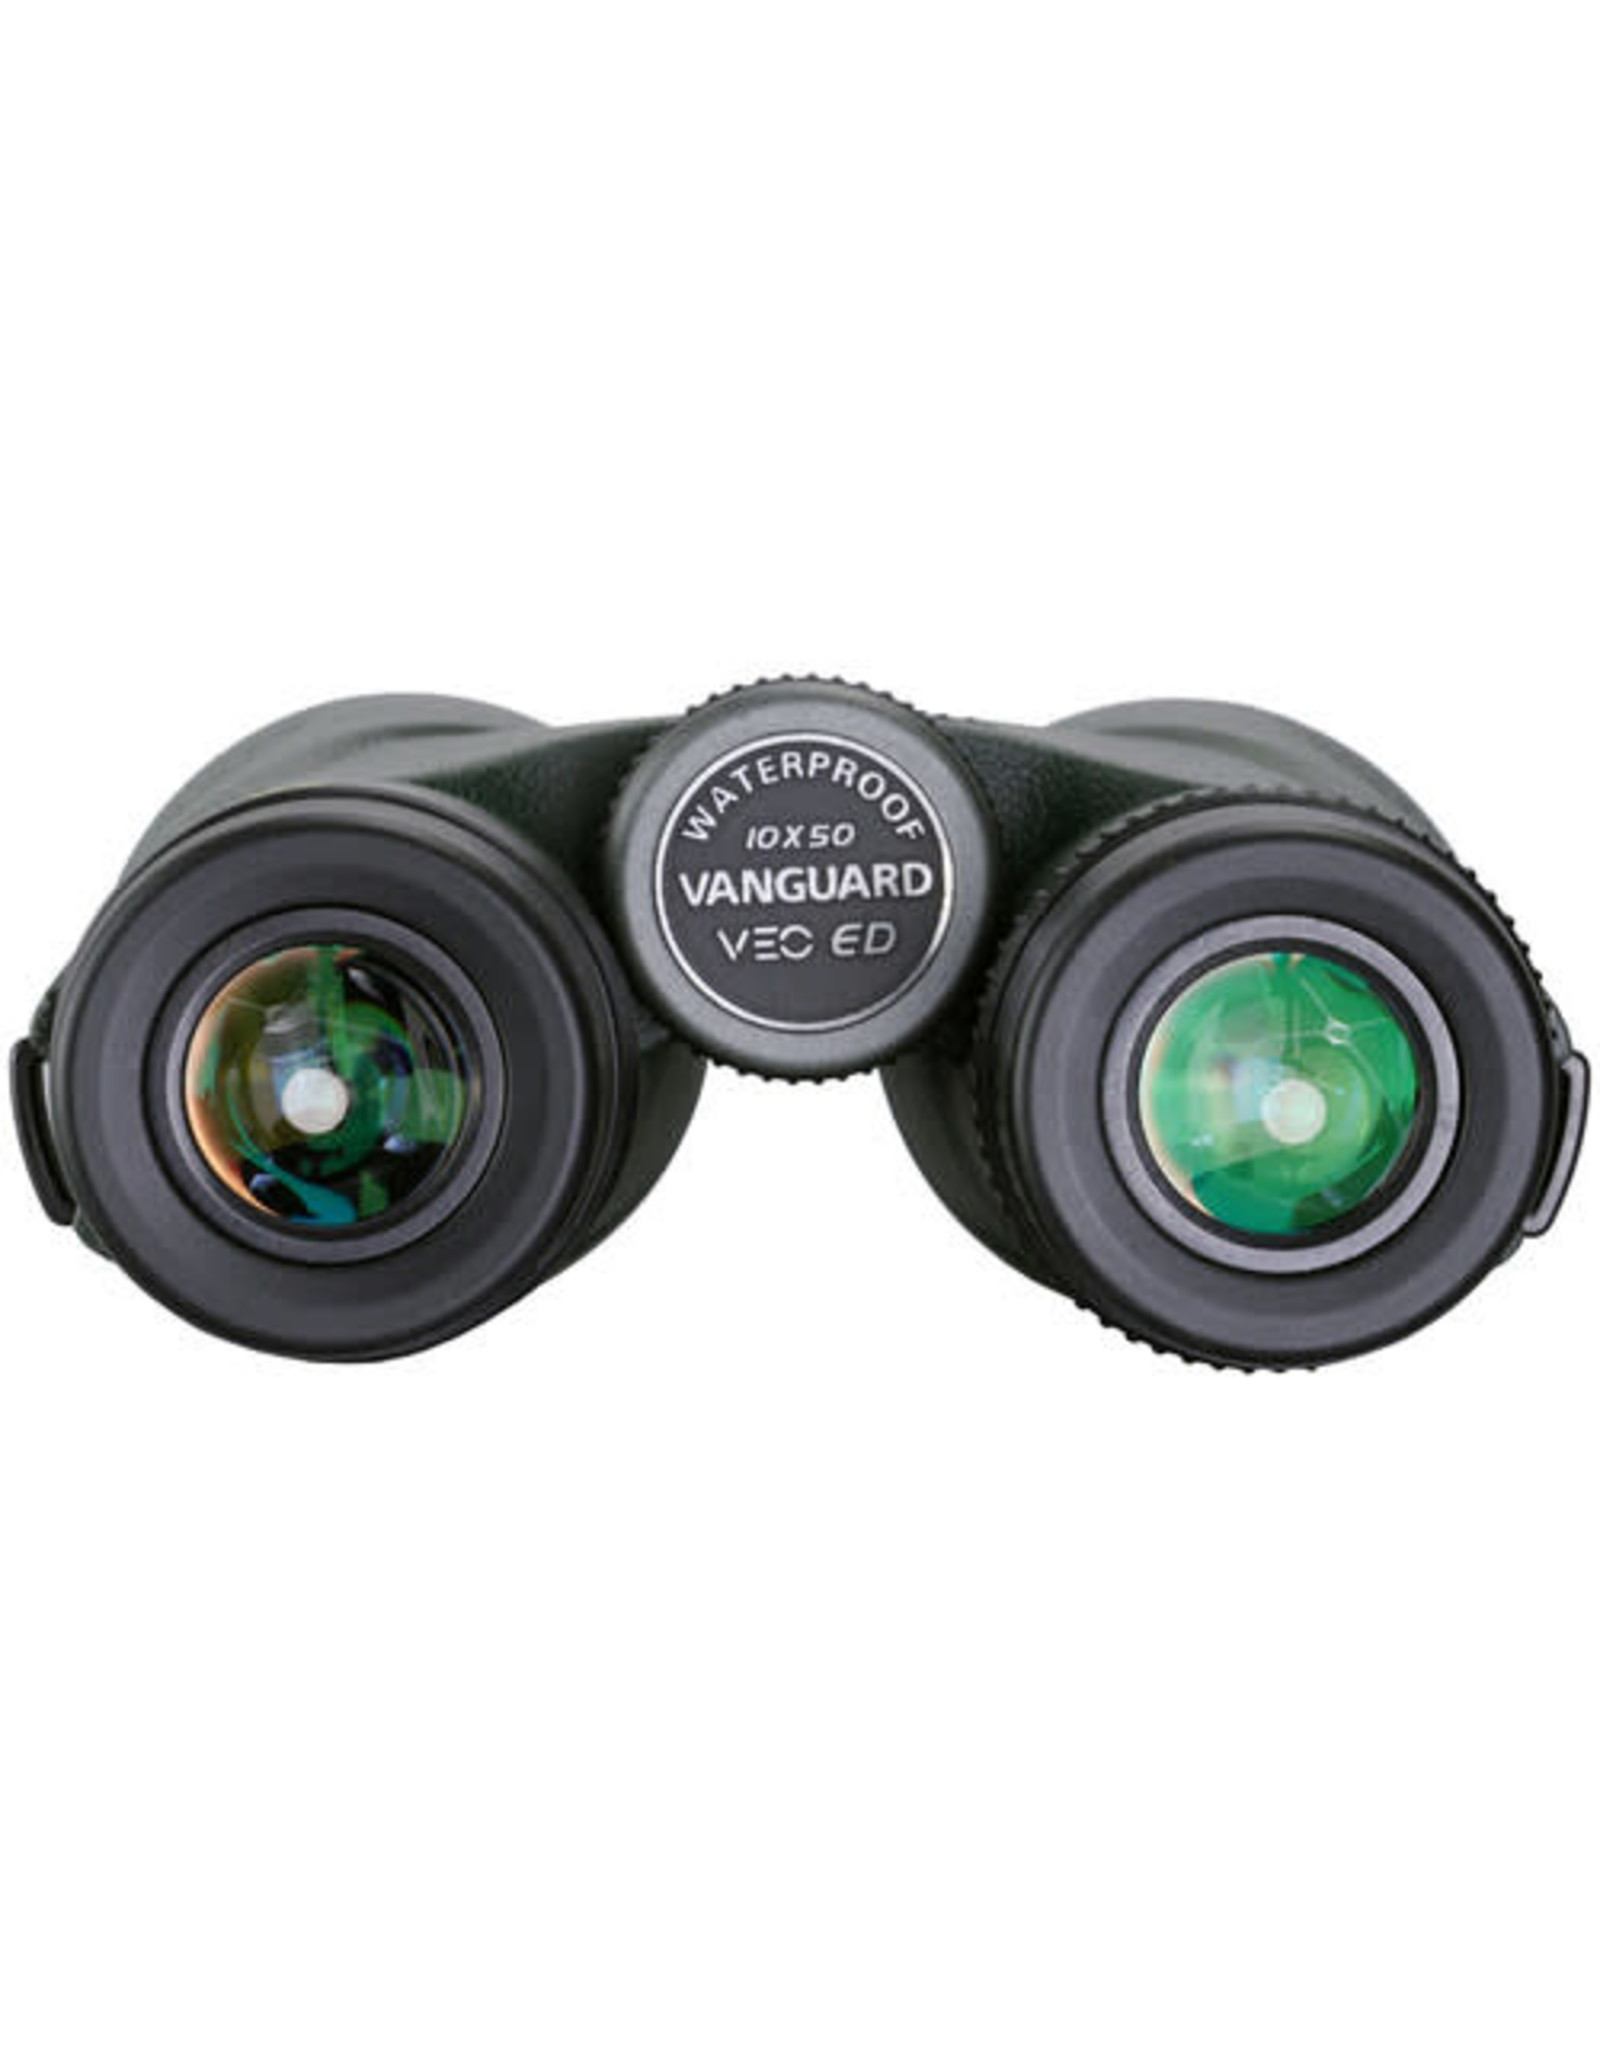 Vanguard Vanguard 10x50 VEO ED Binoculars